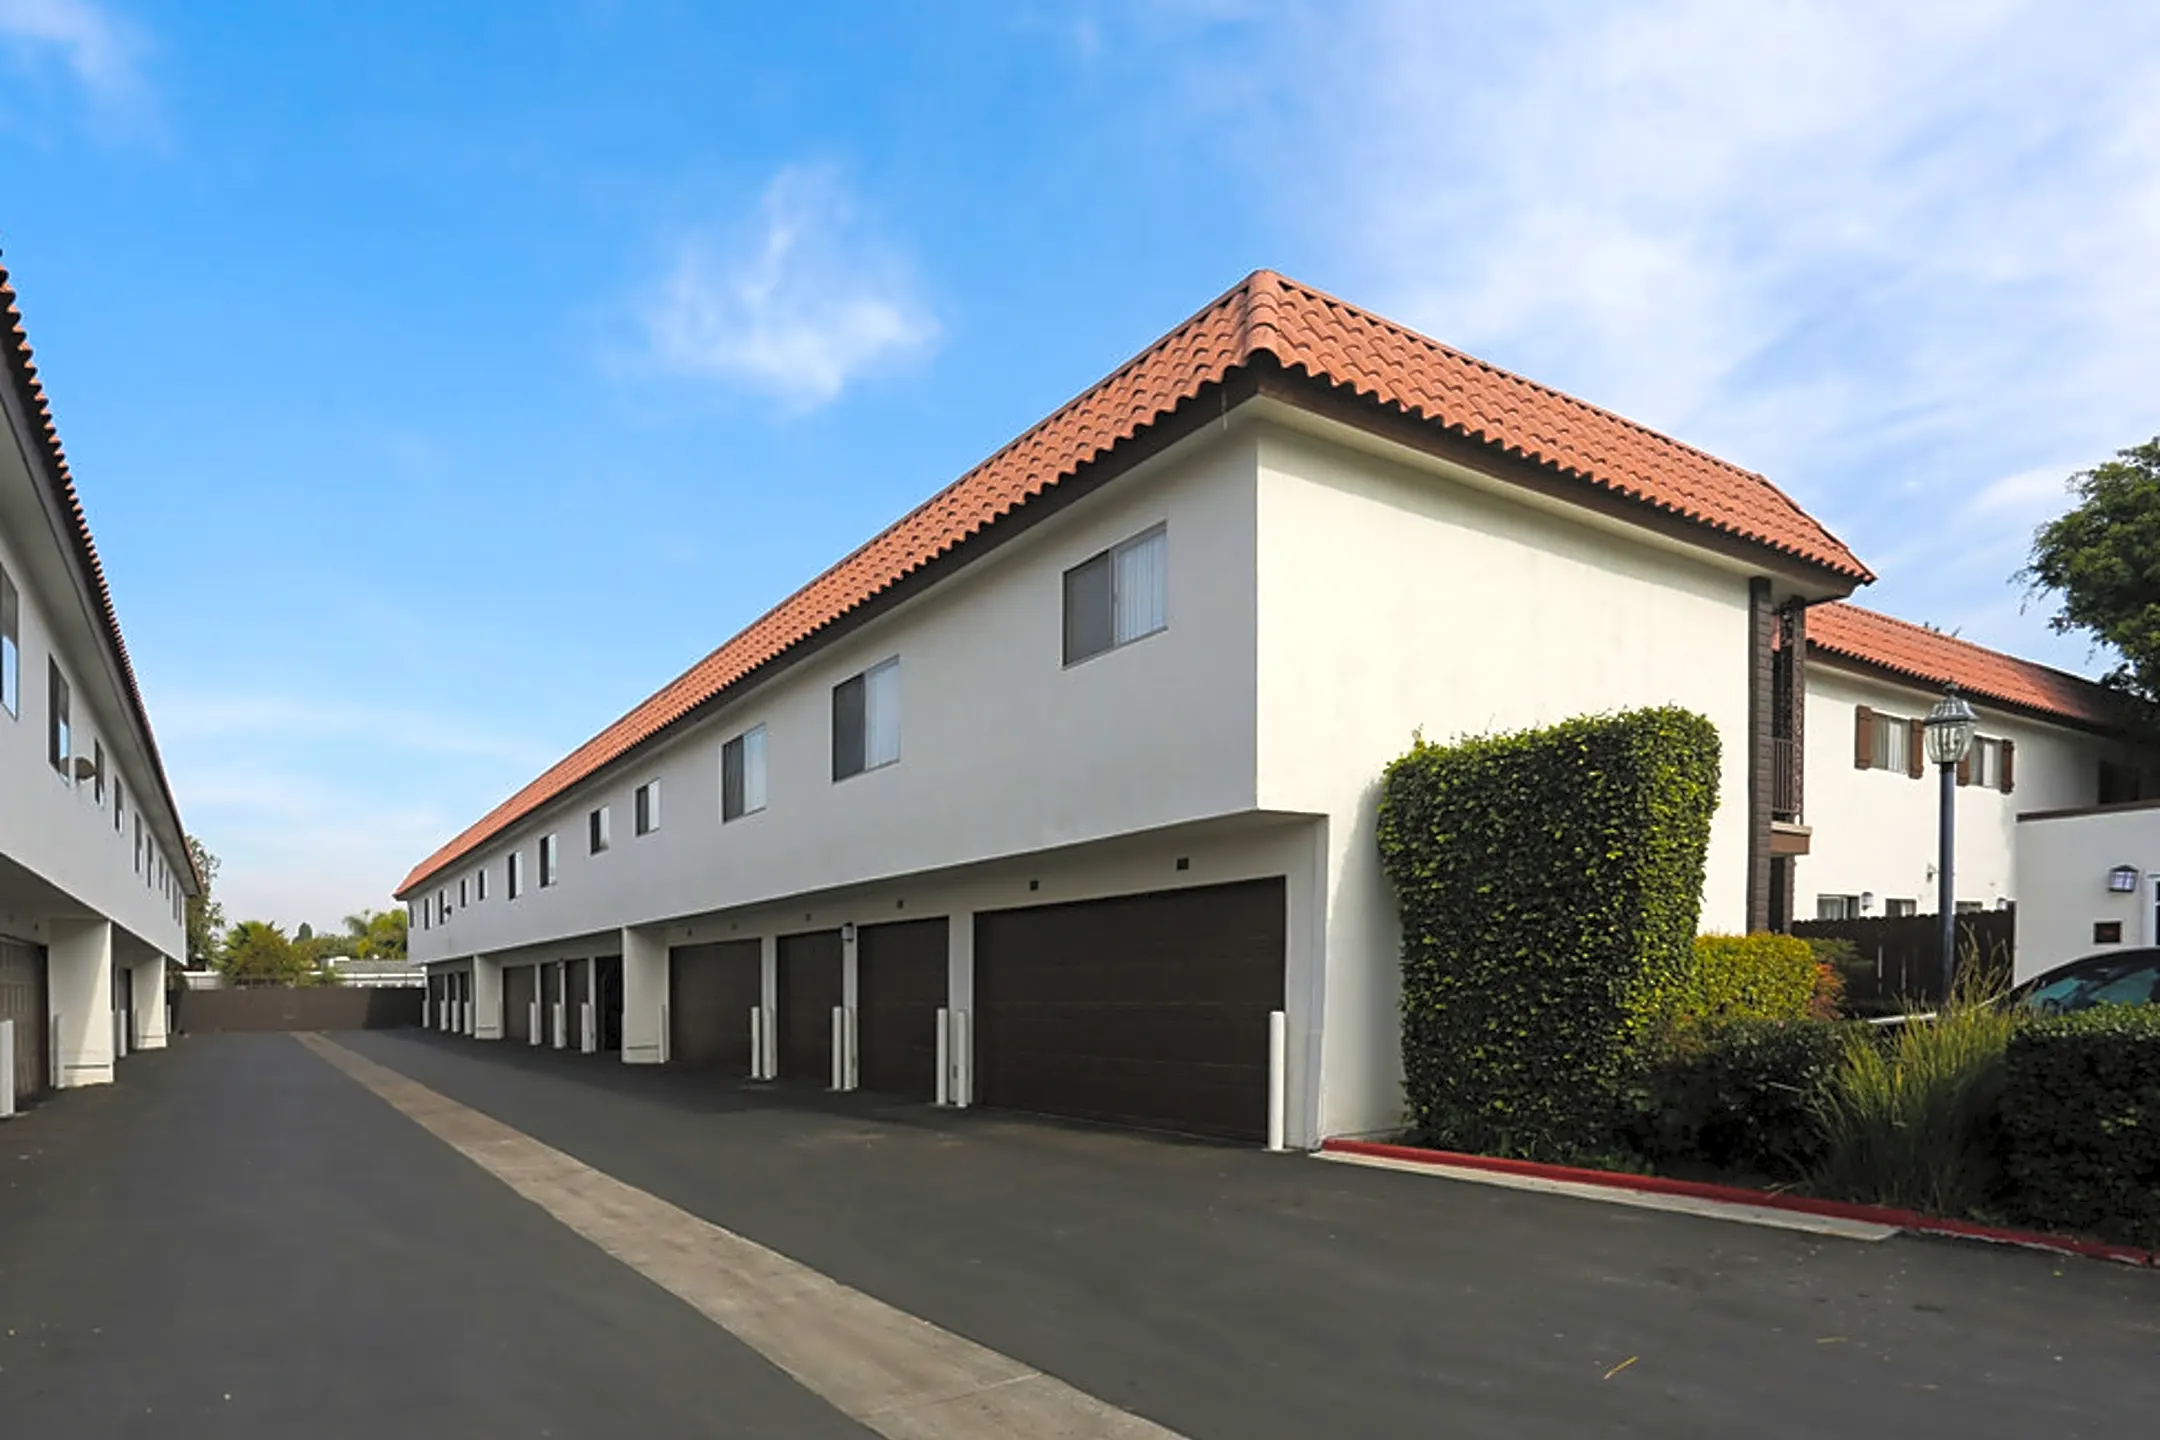 Building - The Courtyards At South Coast - Santa Ana, CA